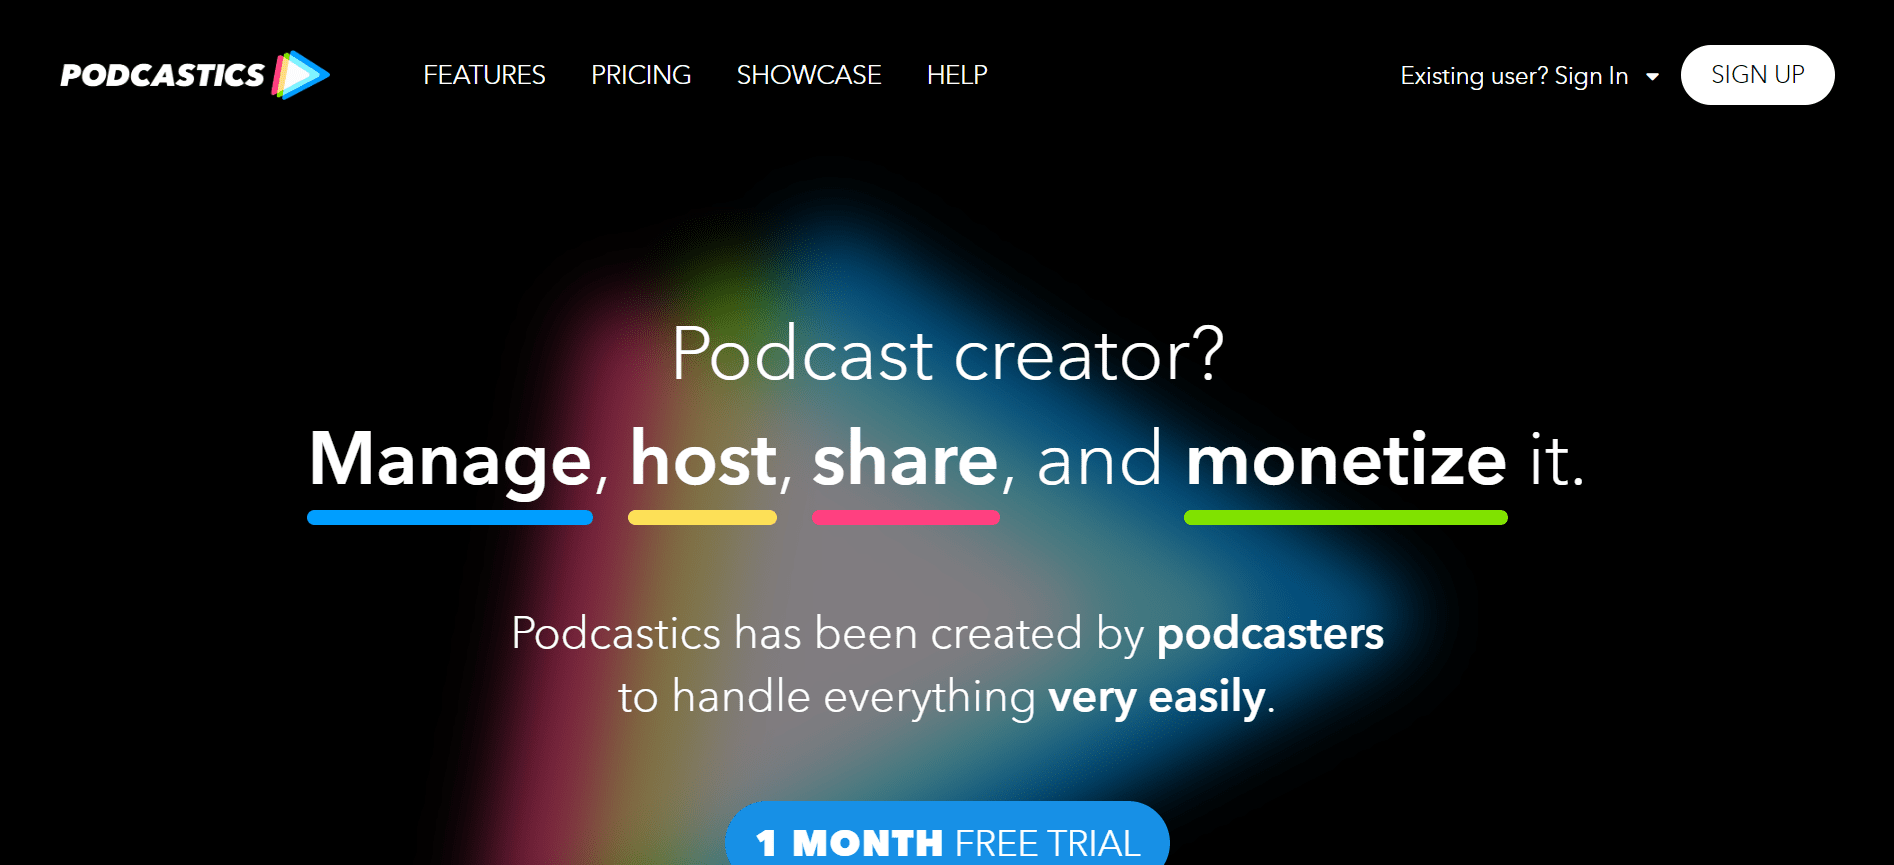 Podcastics - Best Podcast Hosting Provider